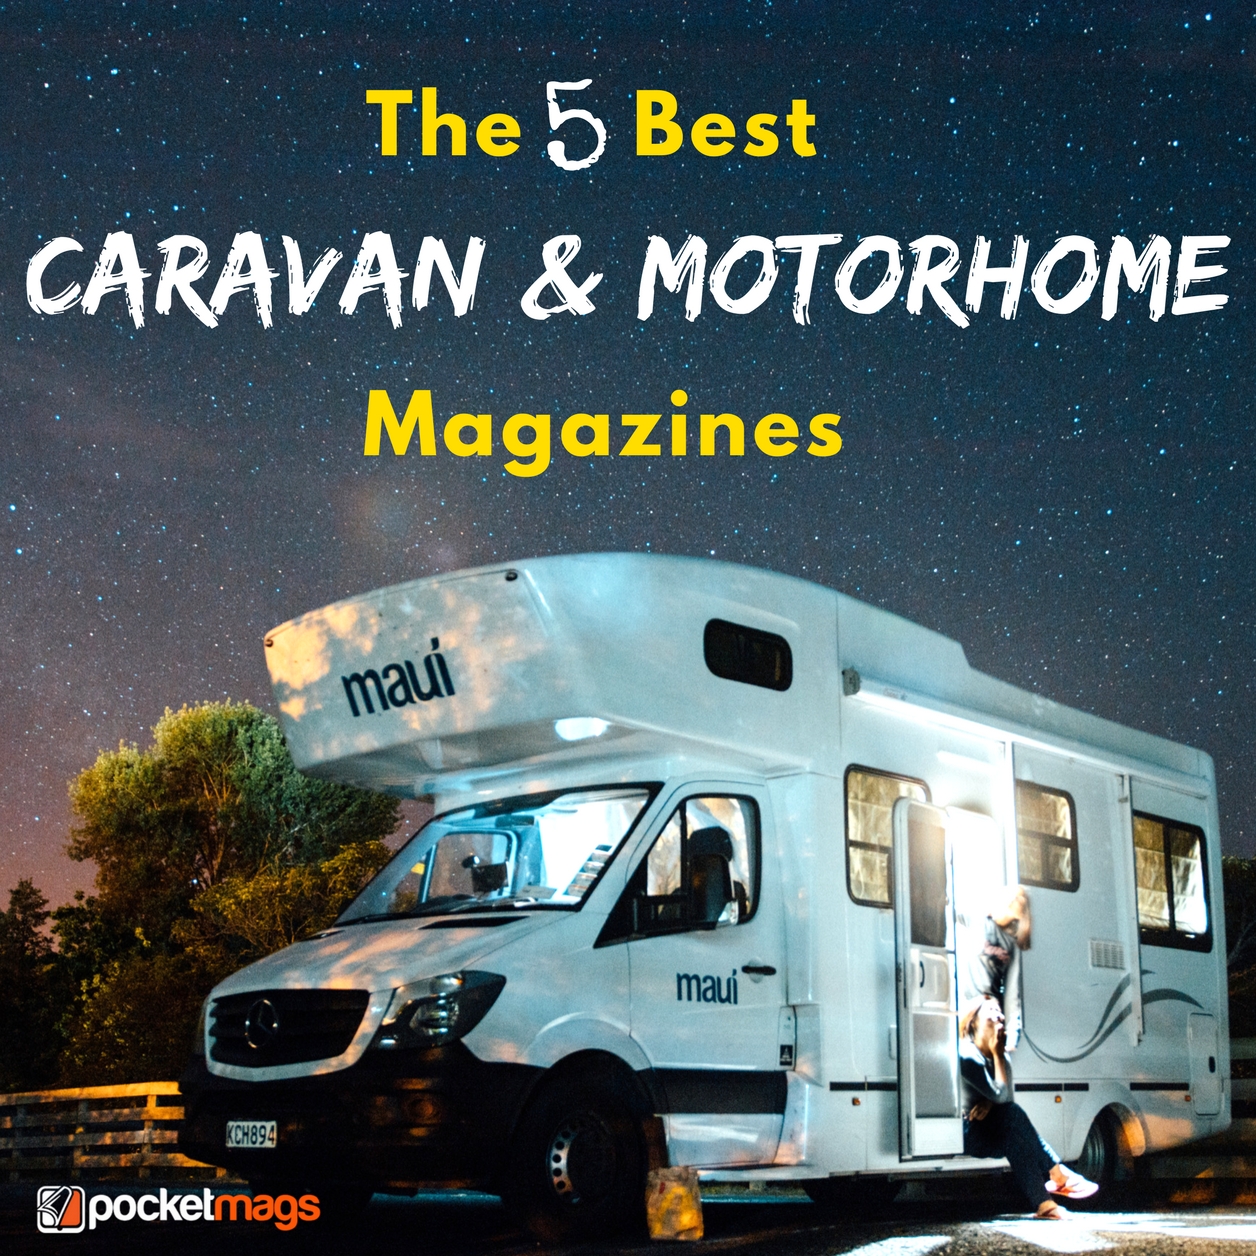 The 5 Best Caravan & Motorhome Magazines